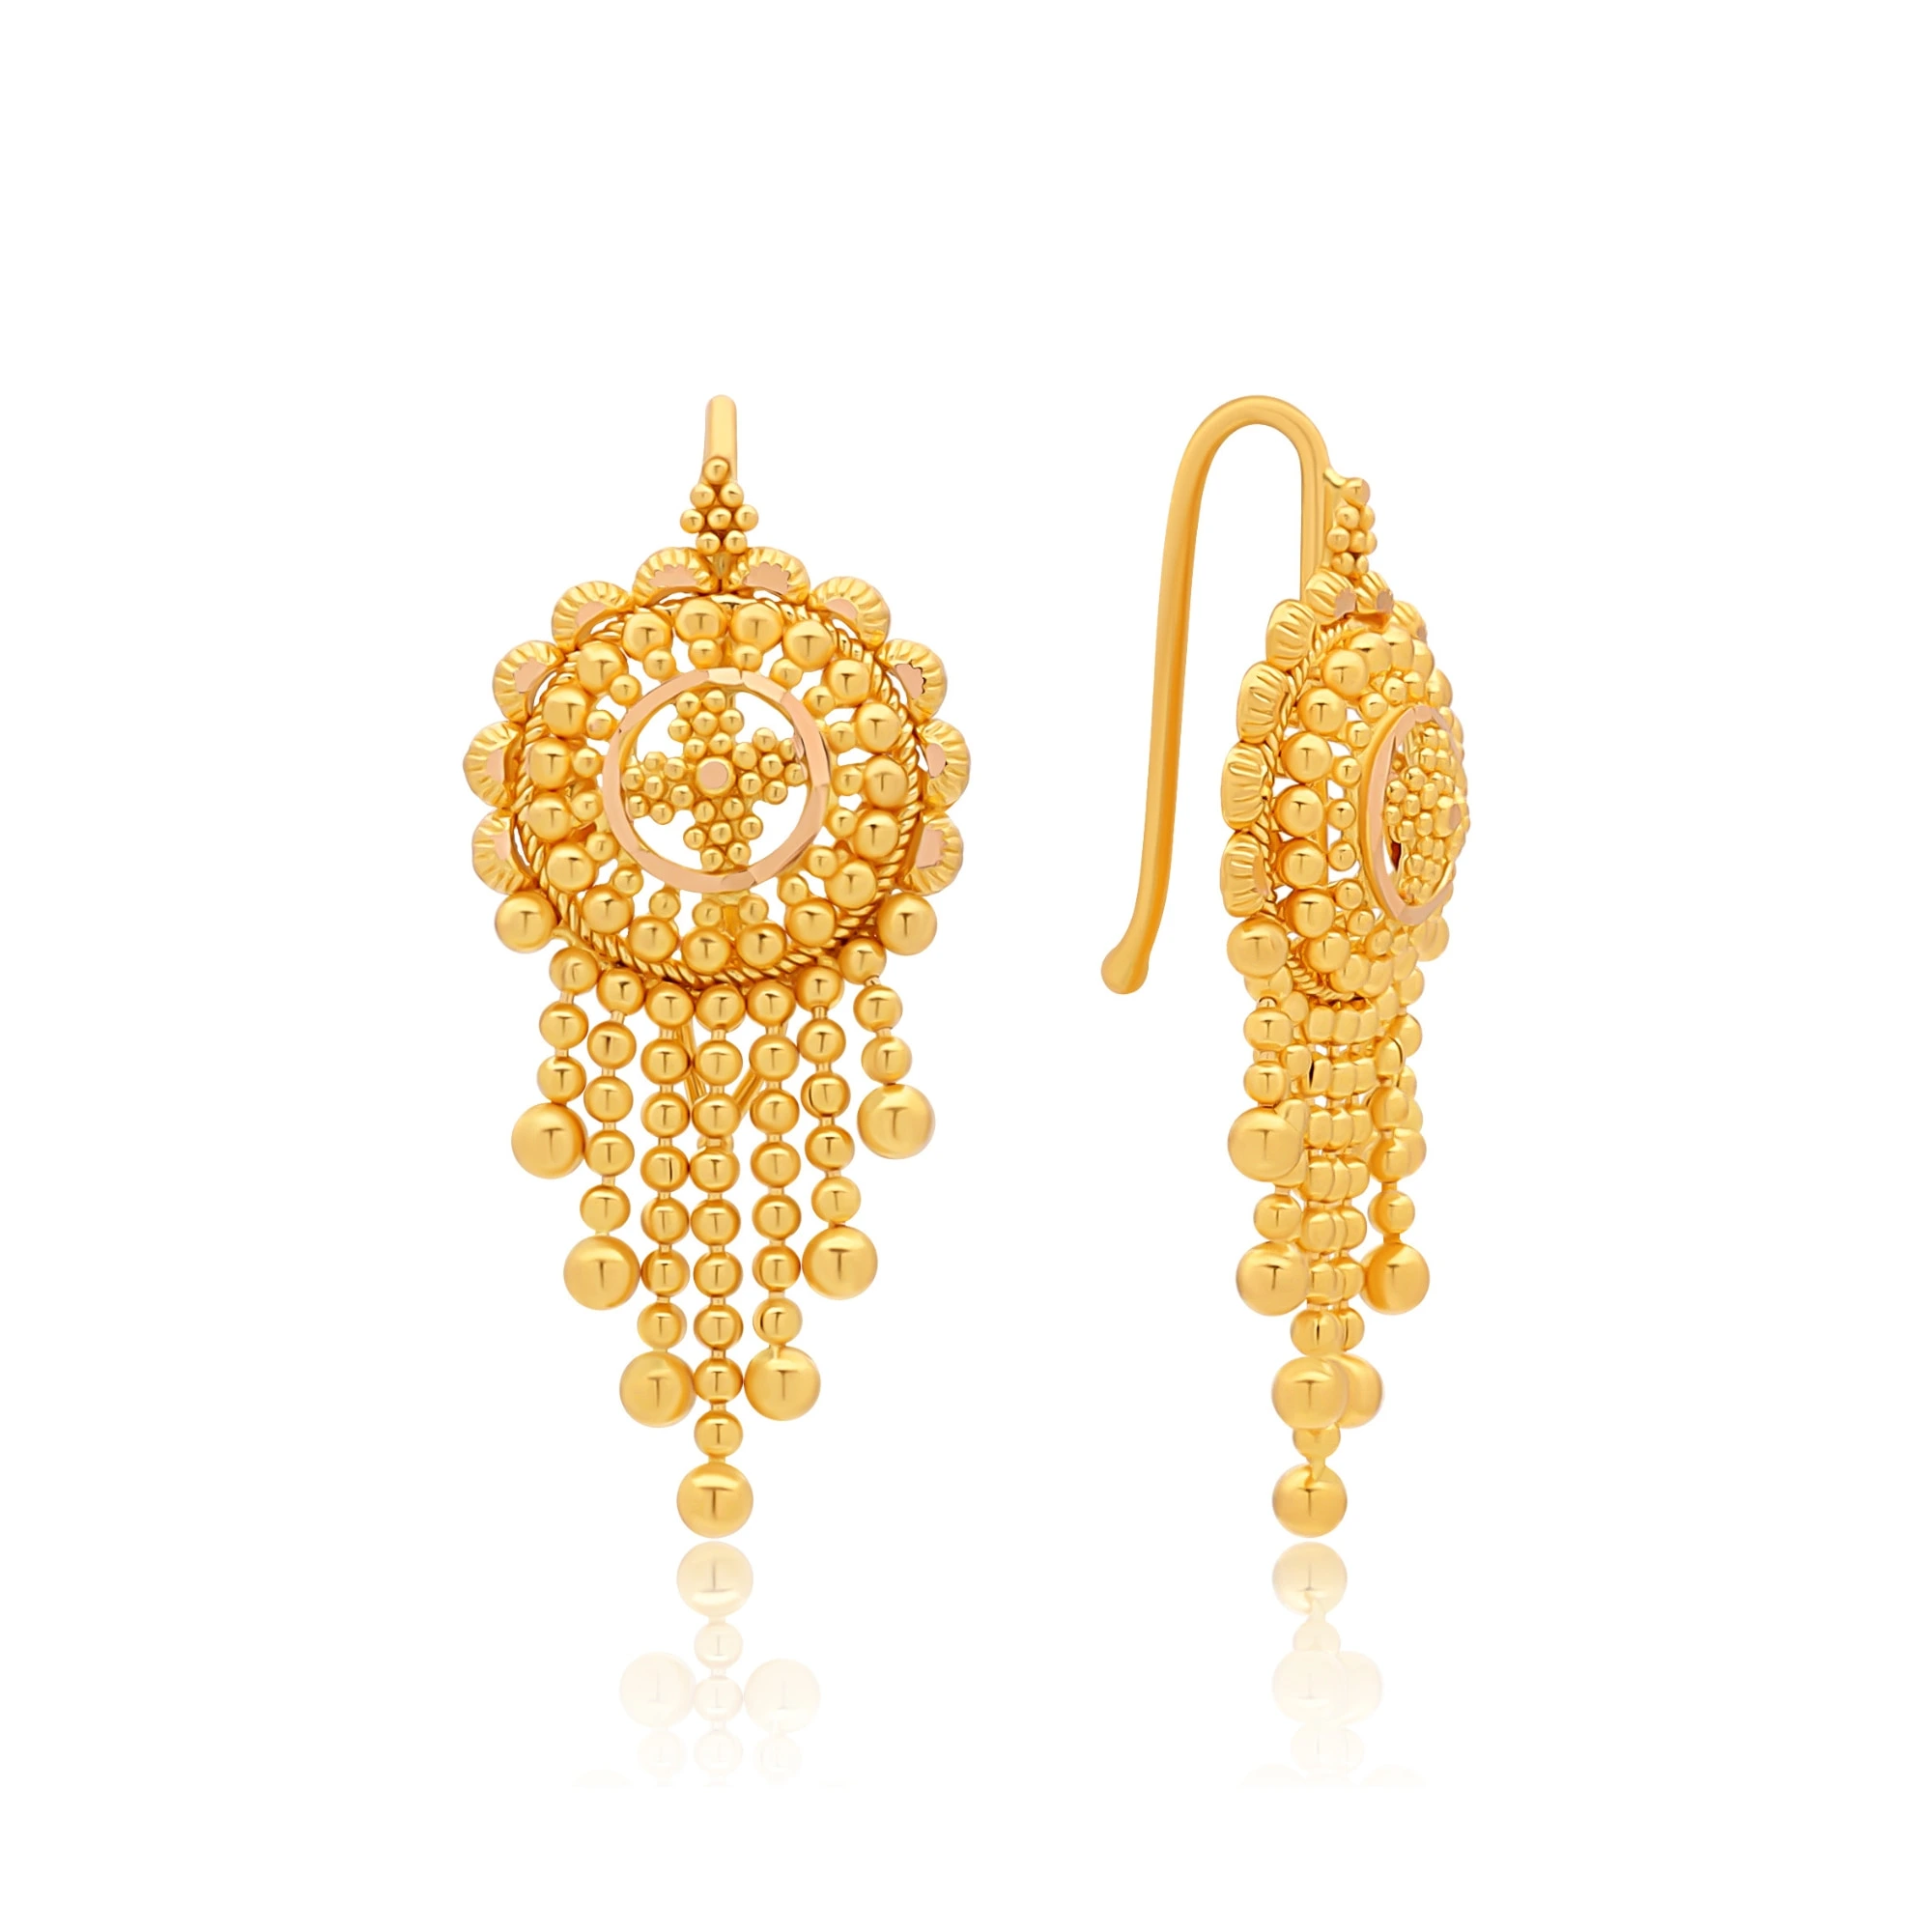 American Diamond Earrings - Statement Gold Earrings - Gianna Statement  Earrings by Blingvine